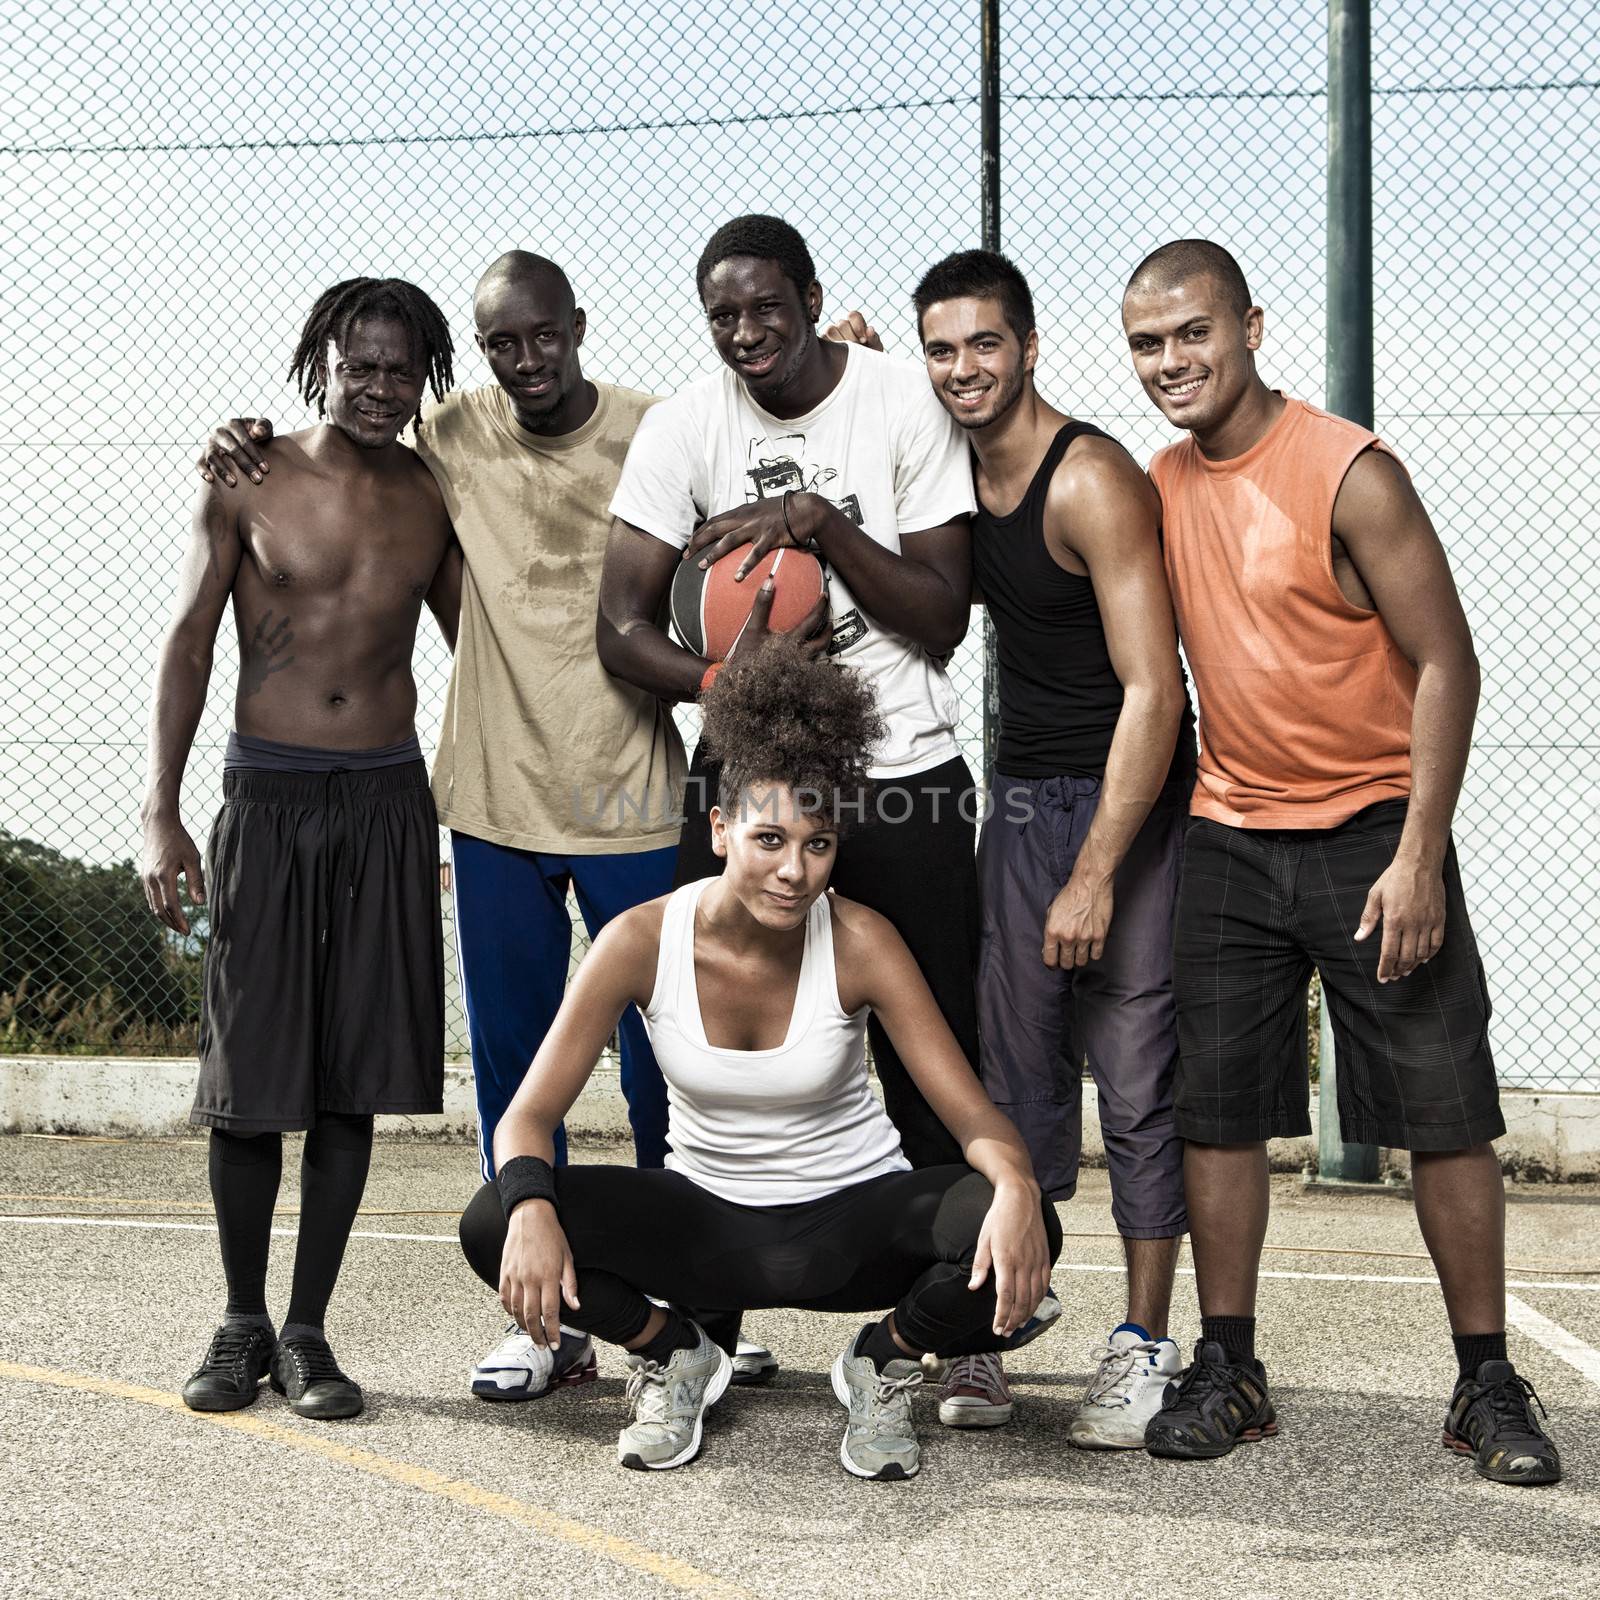 Street basketball team by Iko